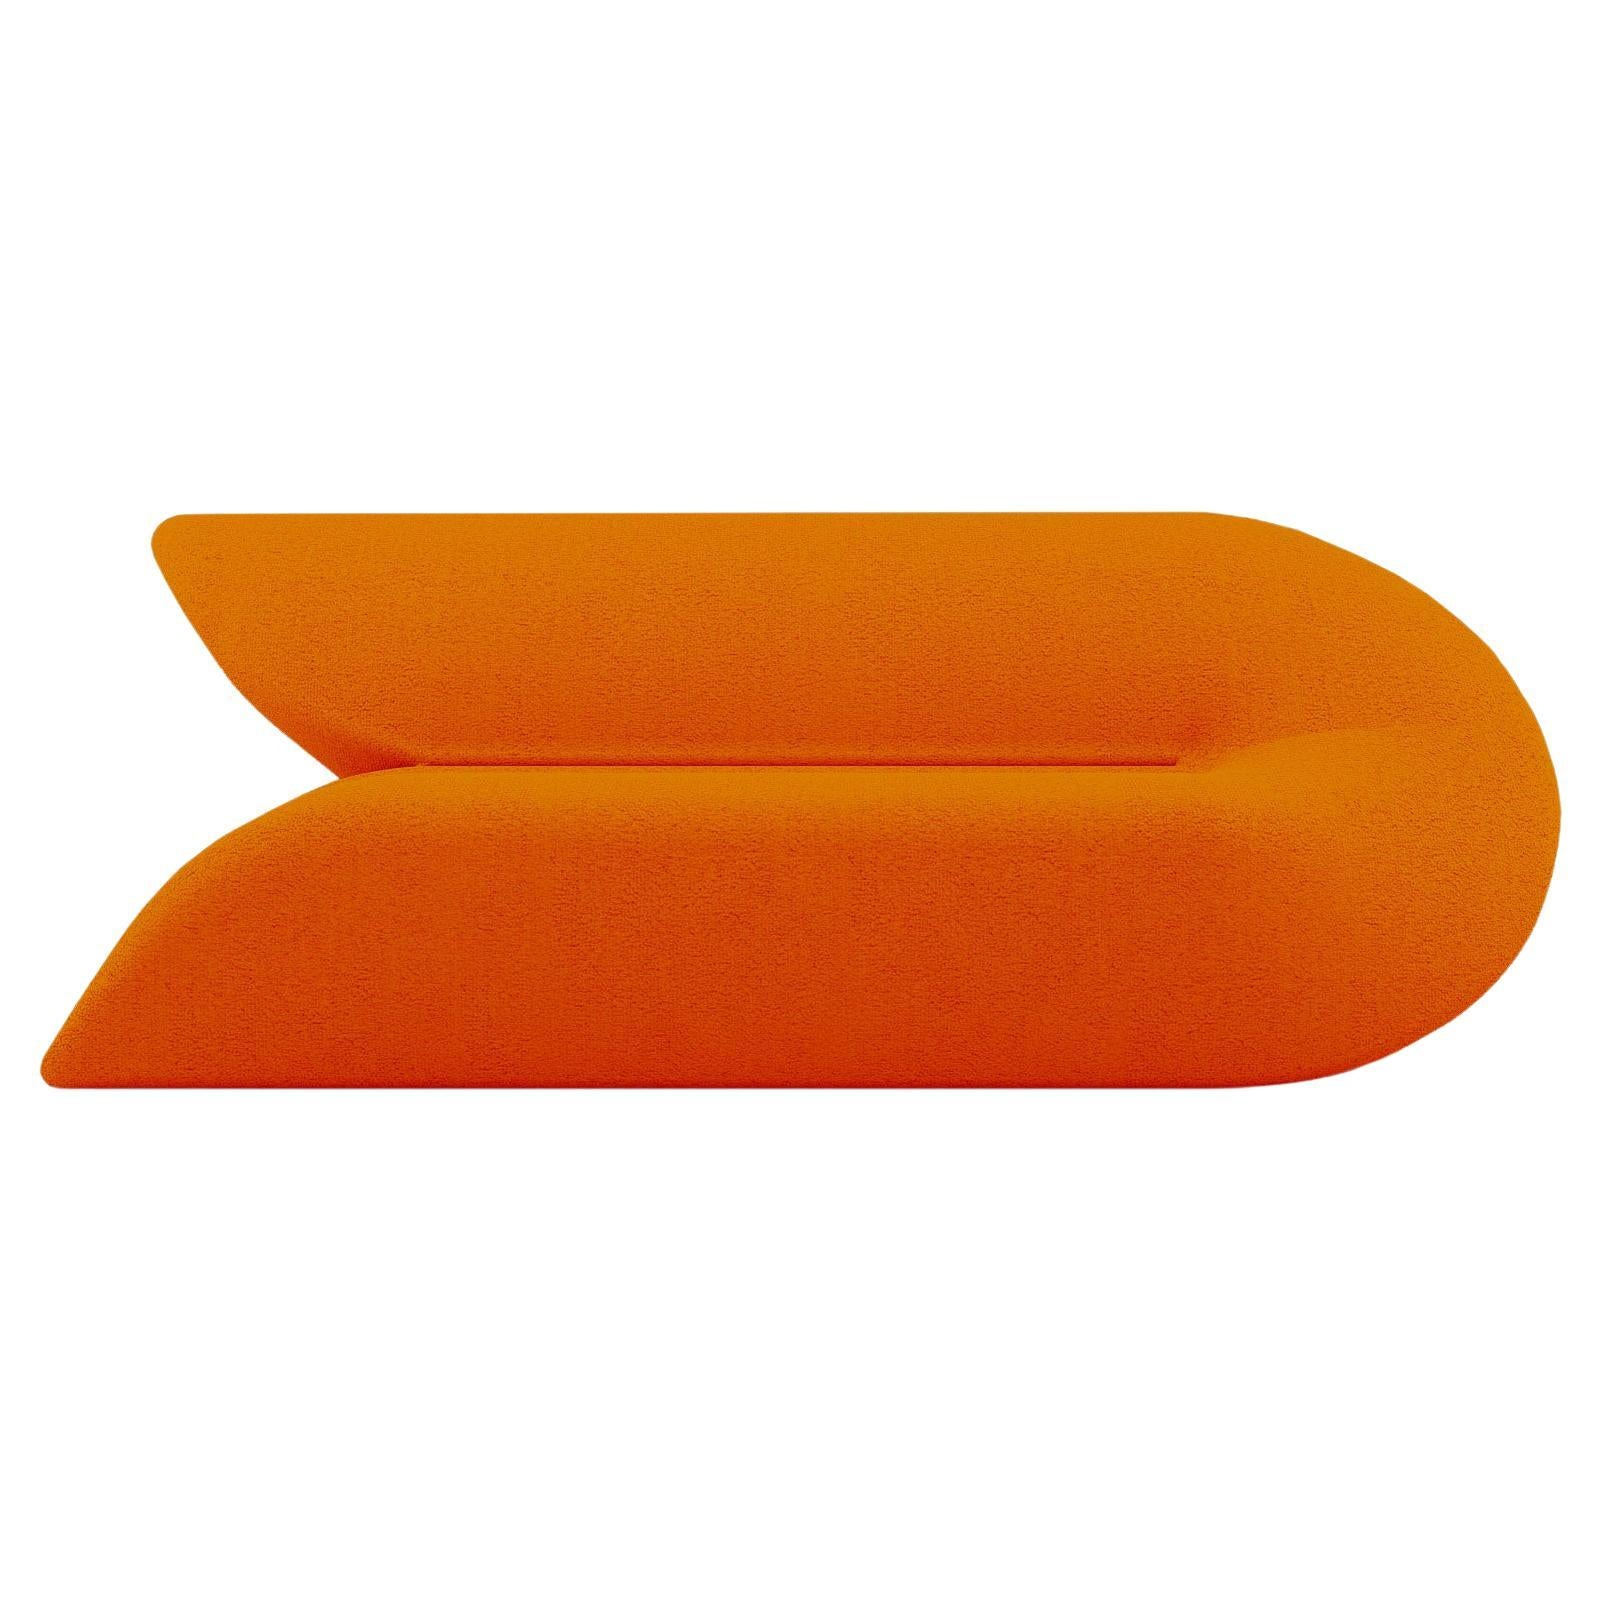 Delta Sofa - Modern Tangerine Orange Upholstered Three Seat Sofa For Sale